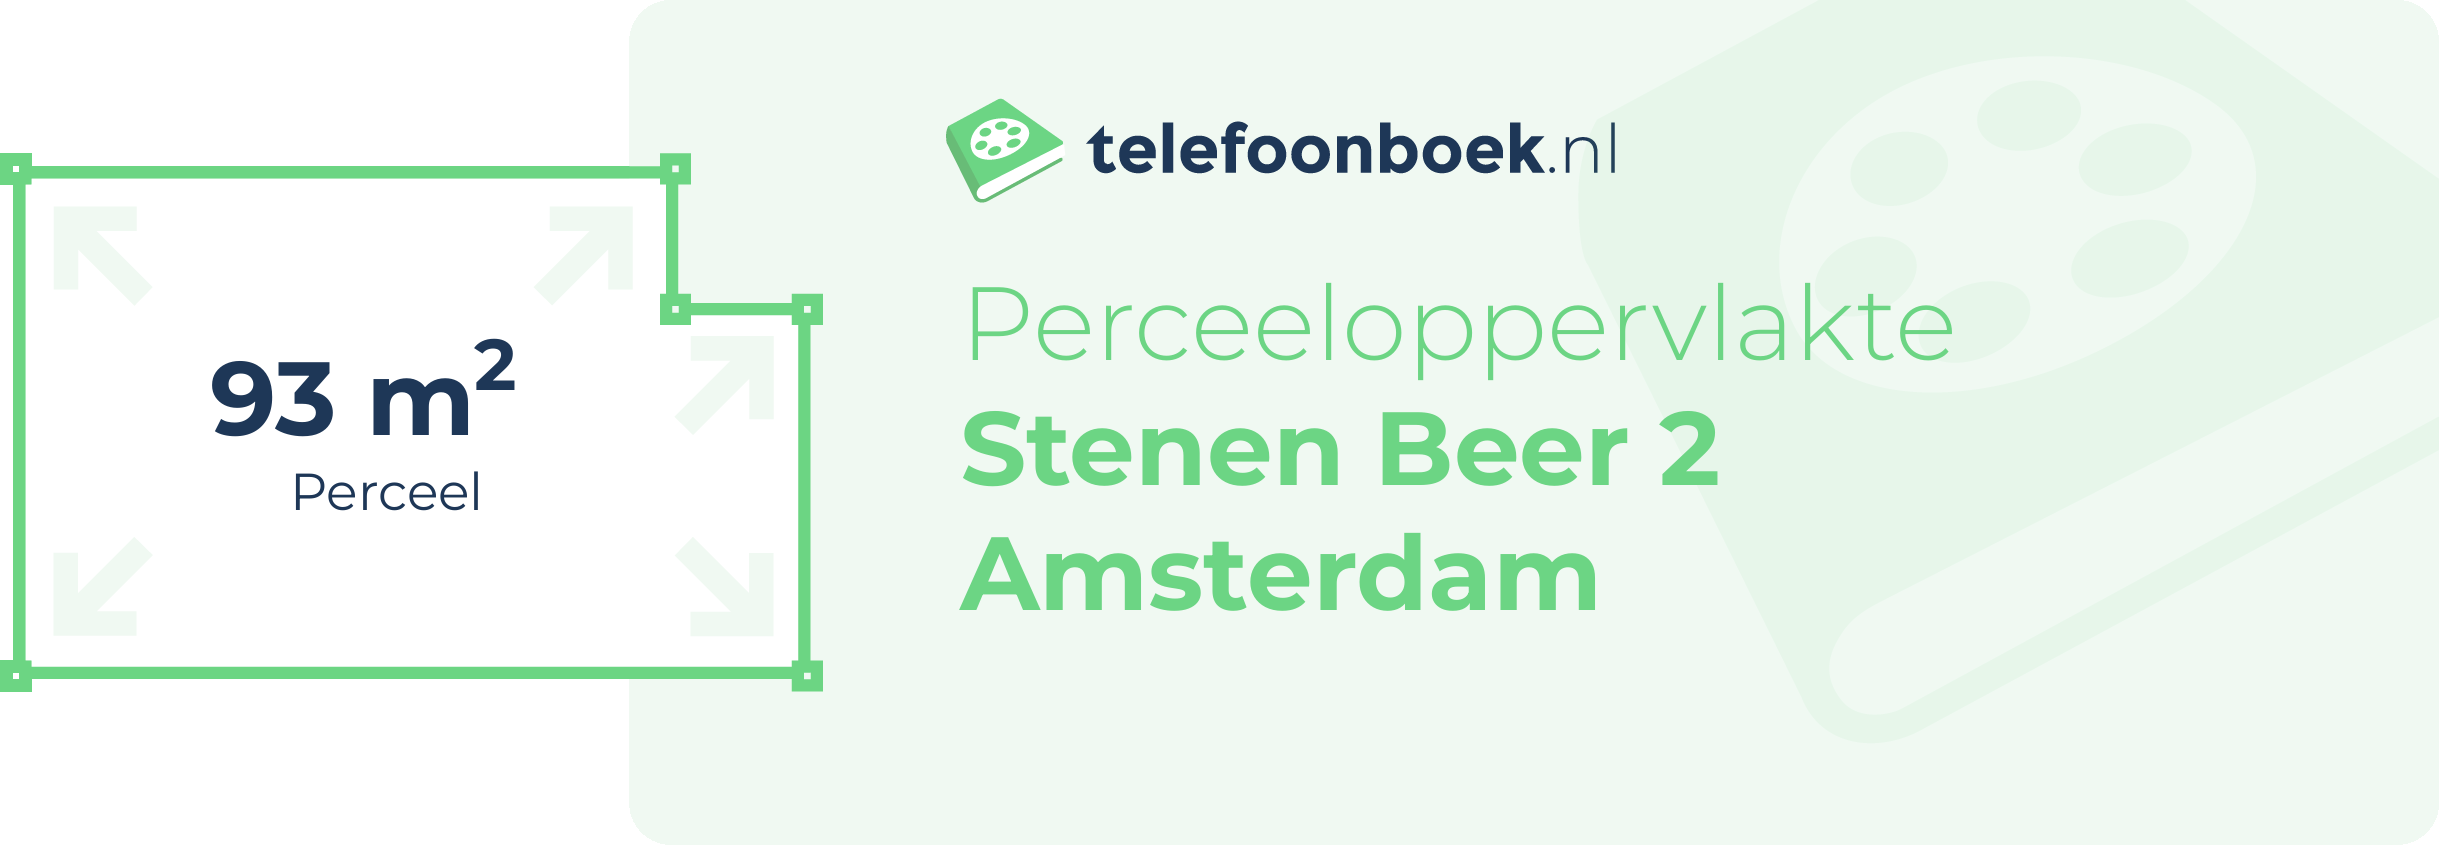 Perceeloppervlakte Stenen Beer 2 Amsterdam